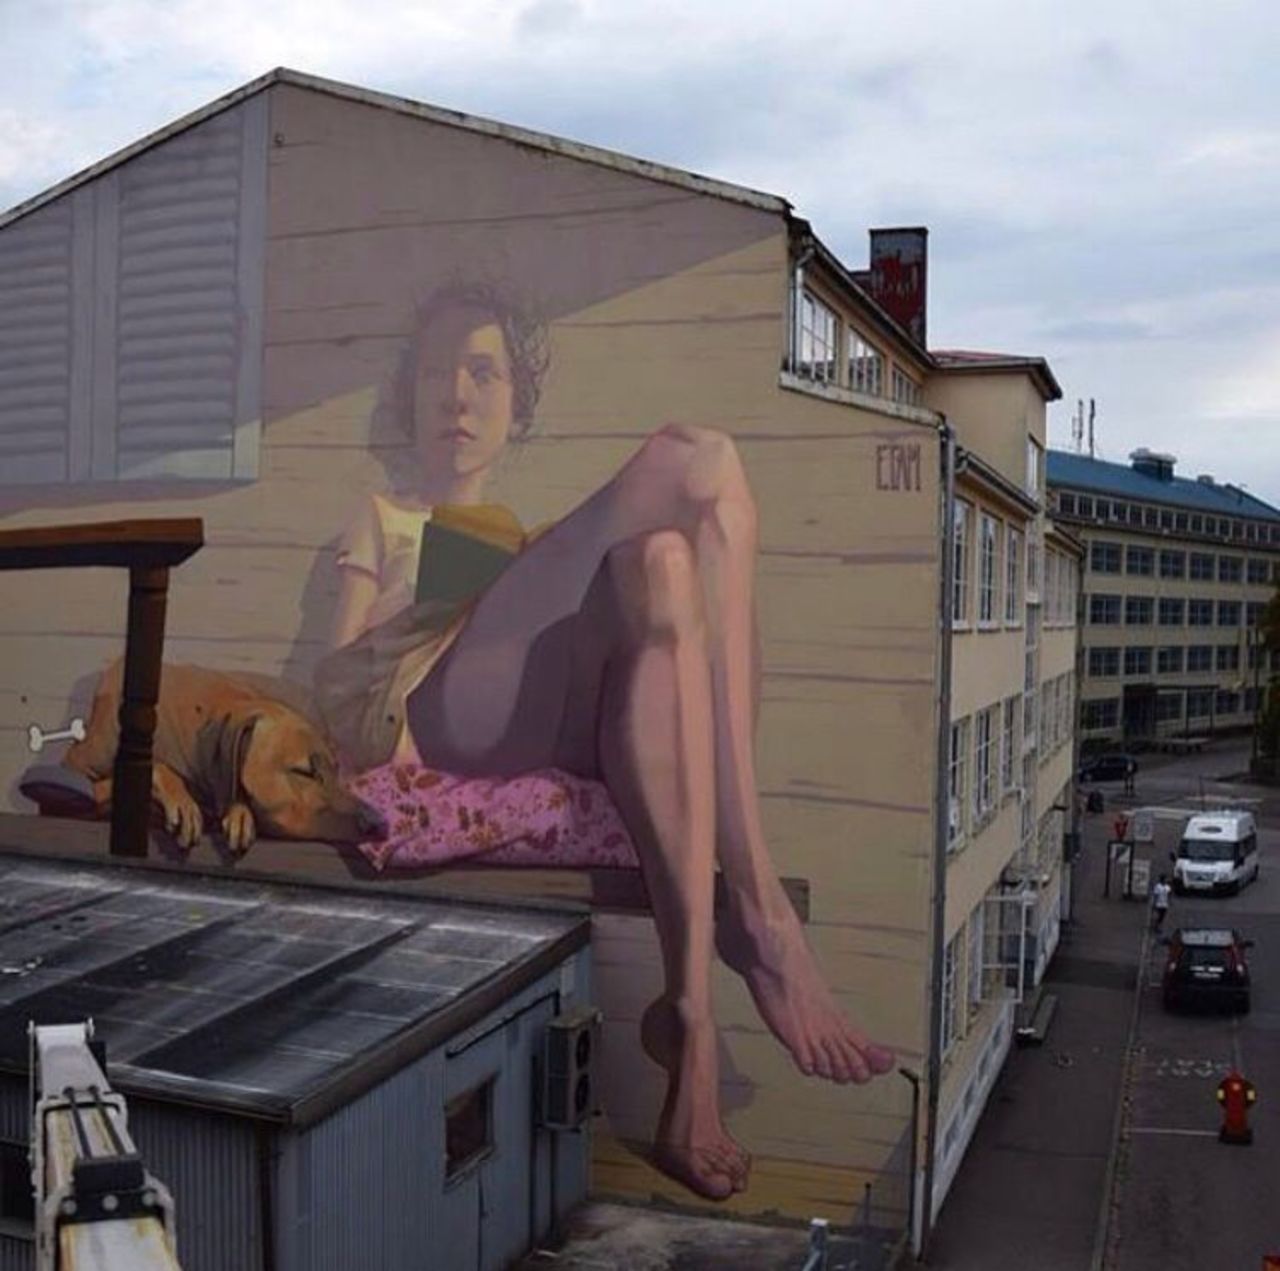 New work by ETAM CRU in Boras, Sweden #streetart #mural #graffiti #art https://t.co/DvxkDMSbaM